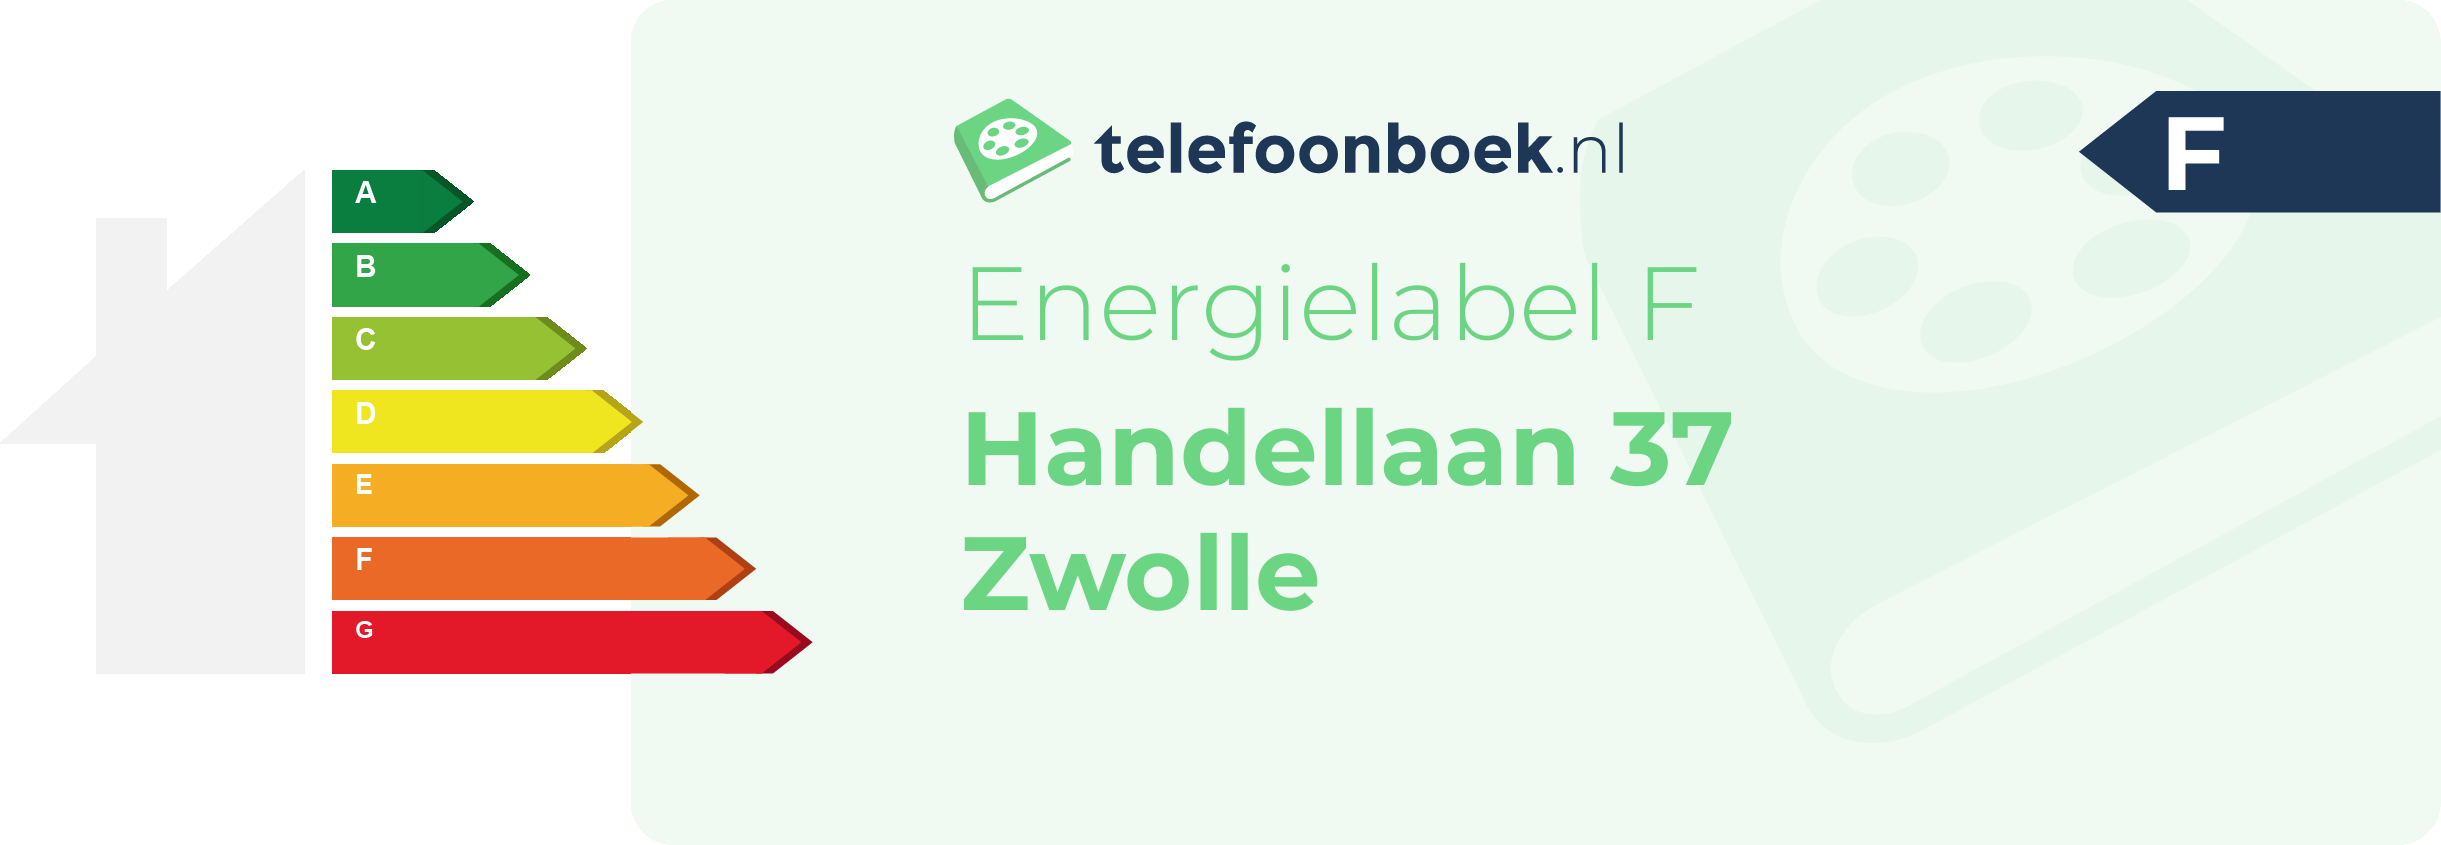 Energielabel Handellaan 37 Zwolle